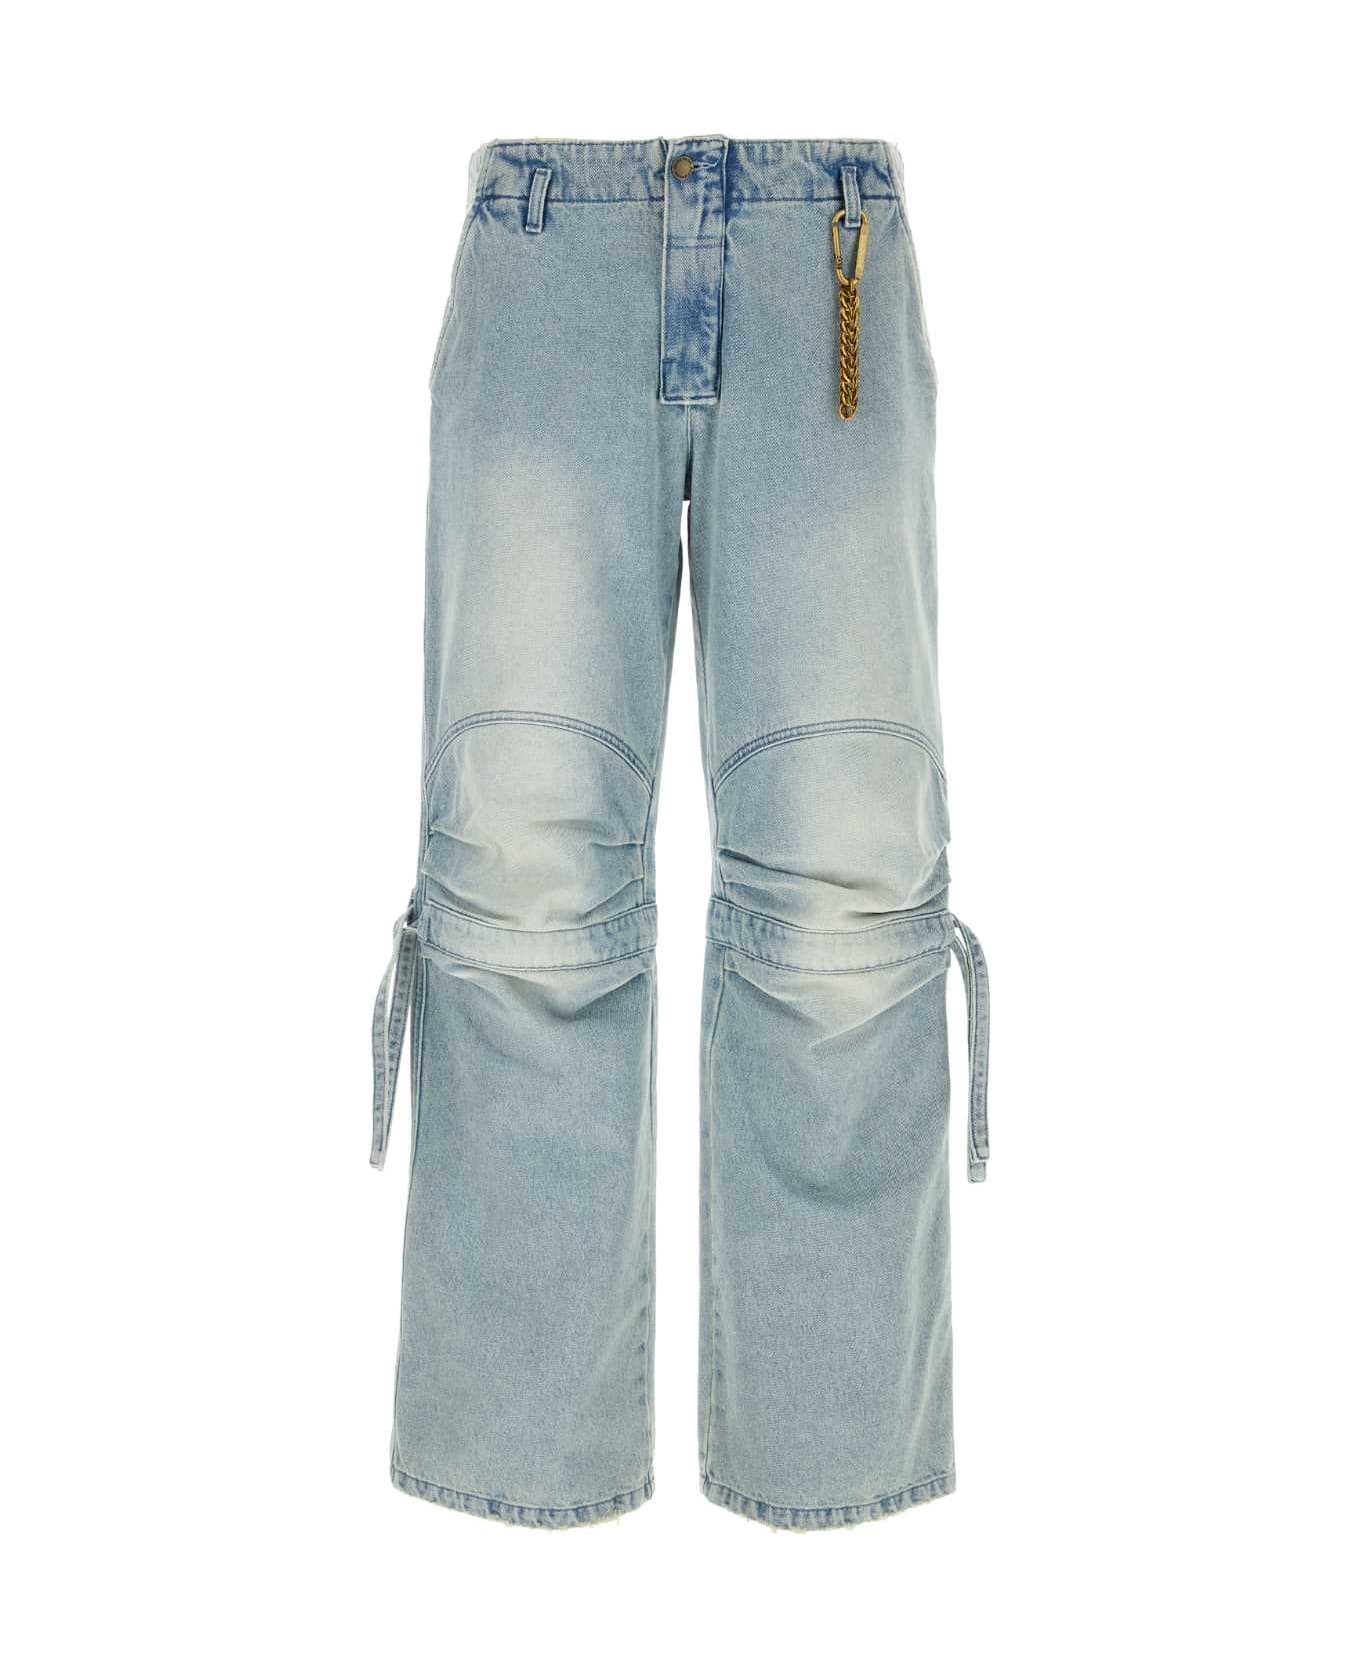 DARKPARK Denim Harper Jeans - LILLIGHT